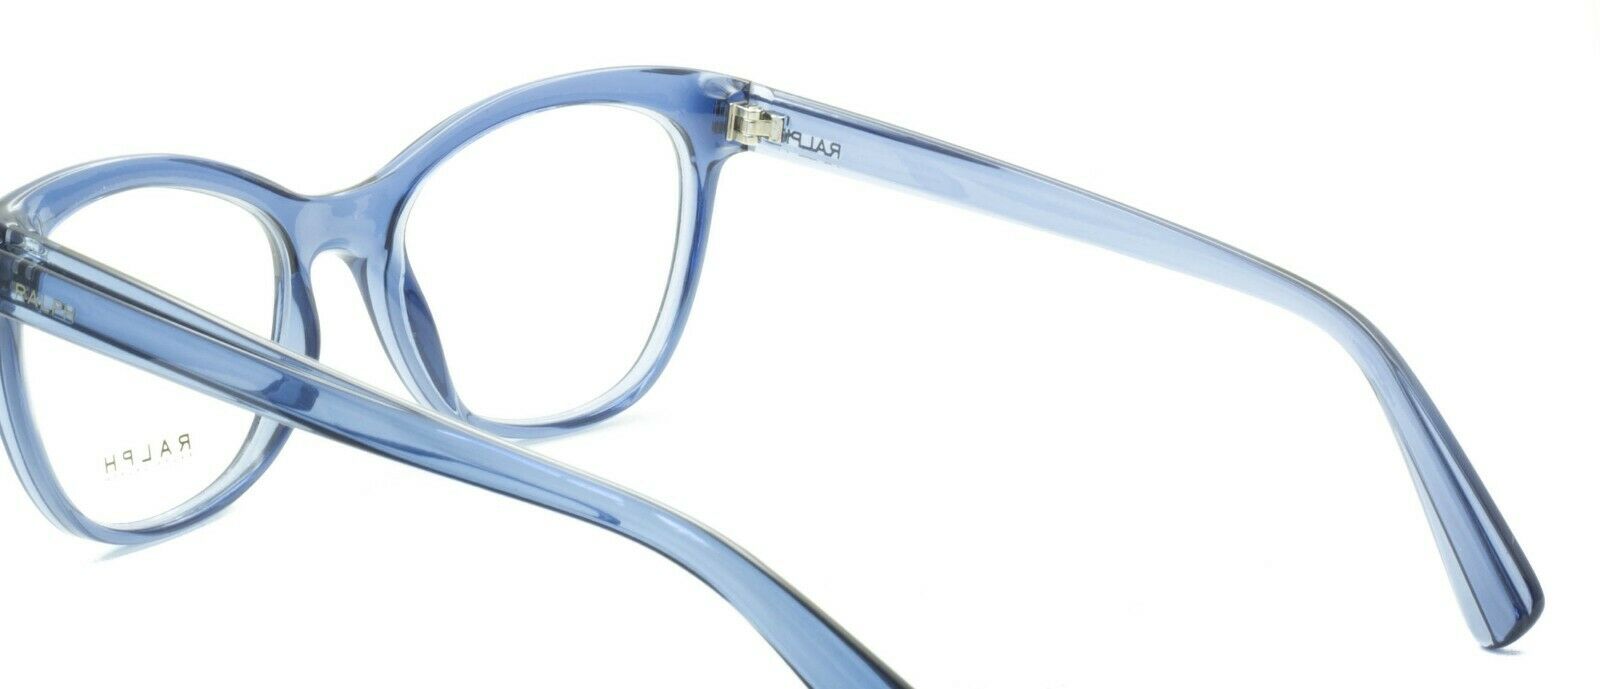 RALPH LAUREN RA 7105 5749 52mm RX Optical Eyewear FRAMES Eyeglasses Glasses -New